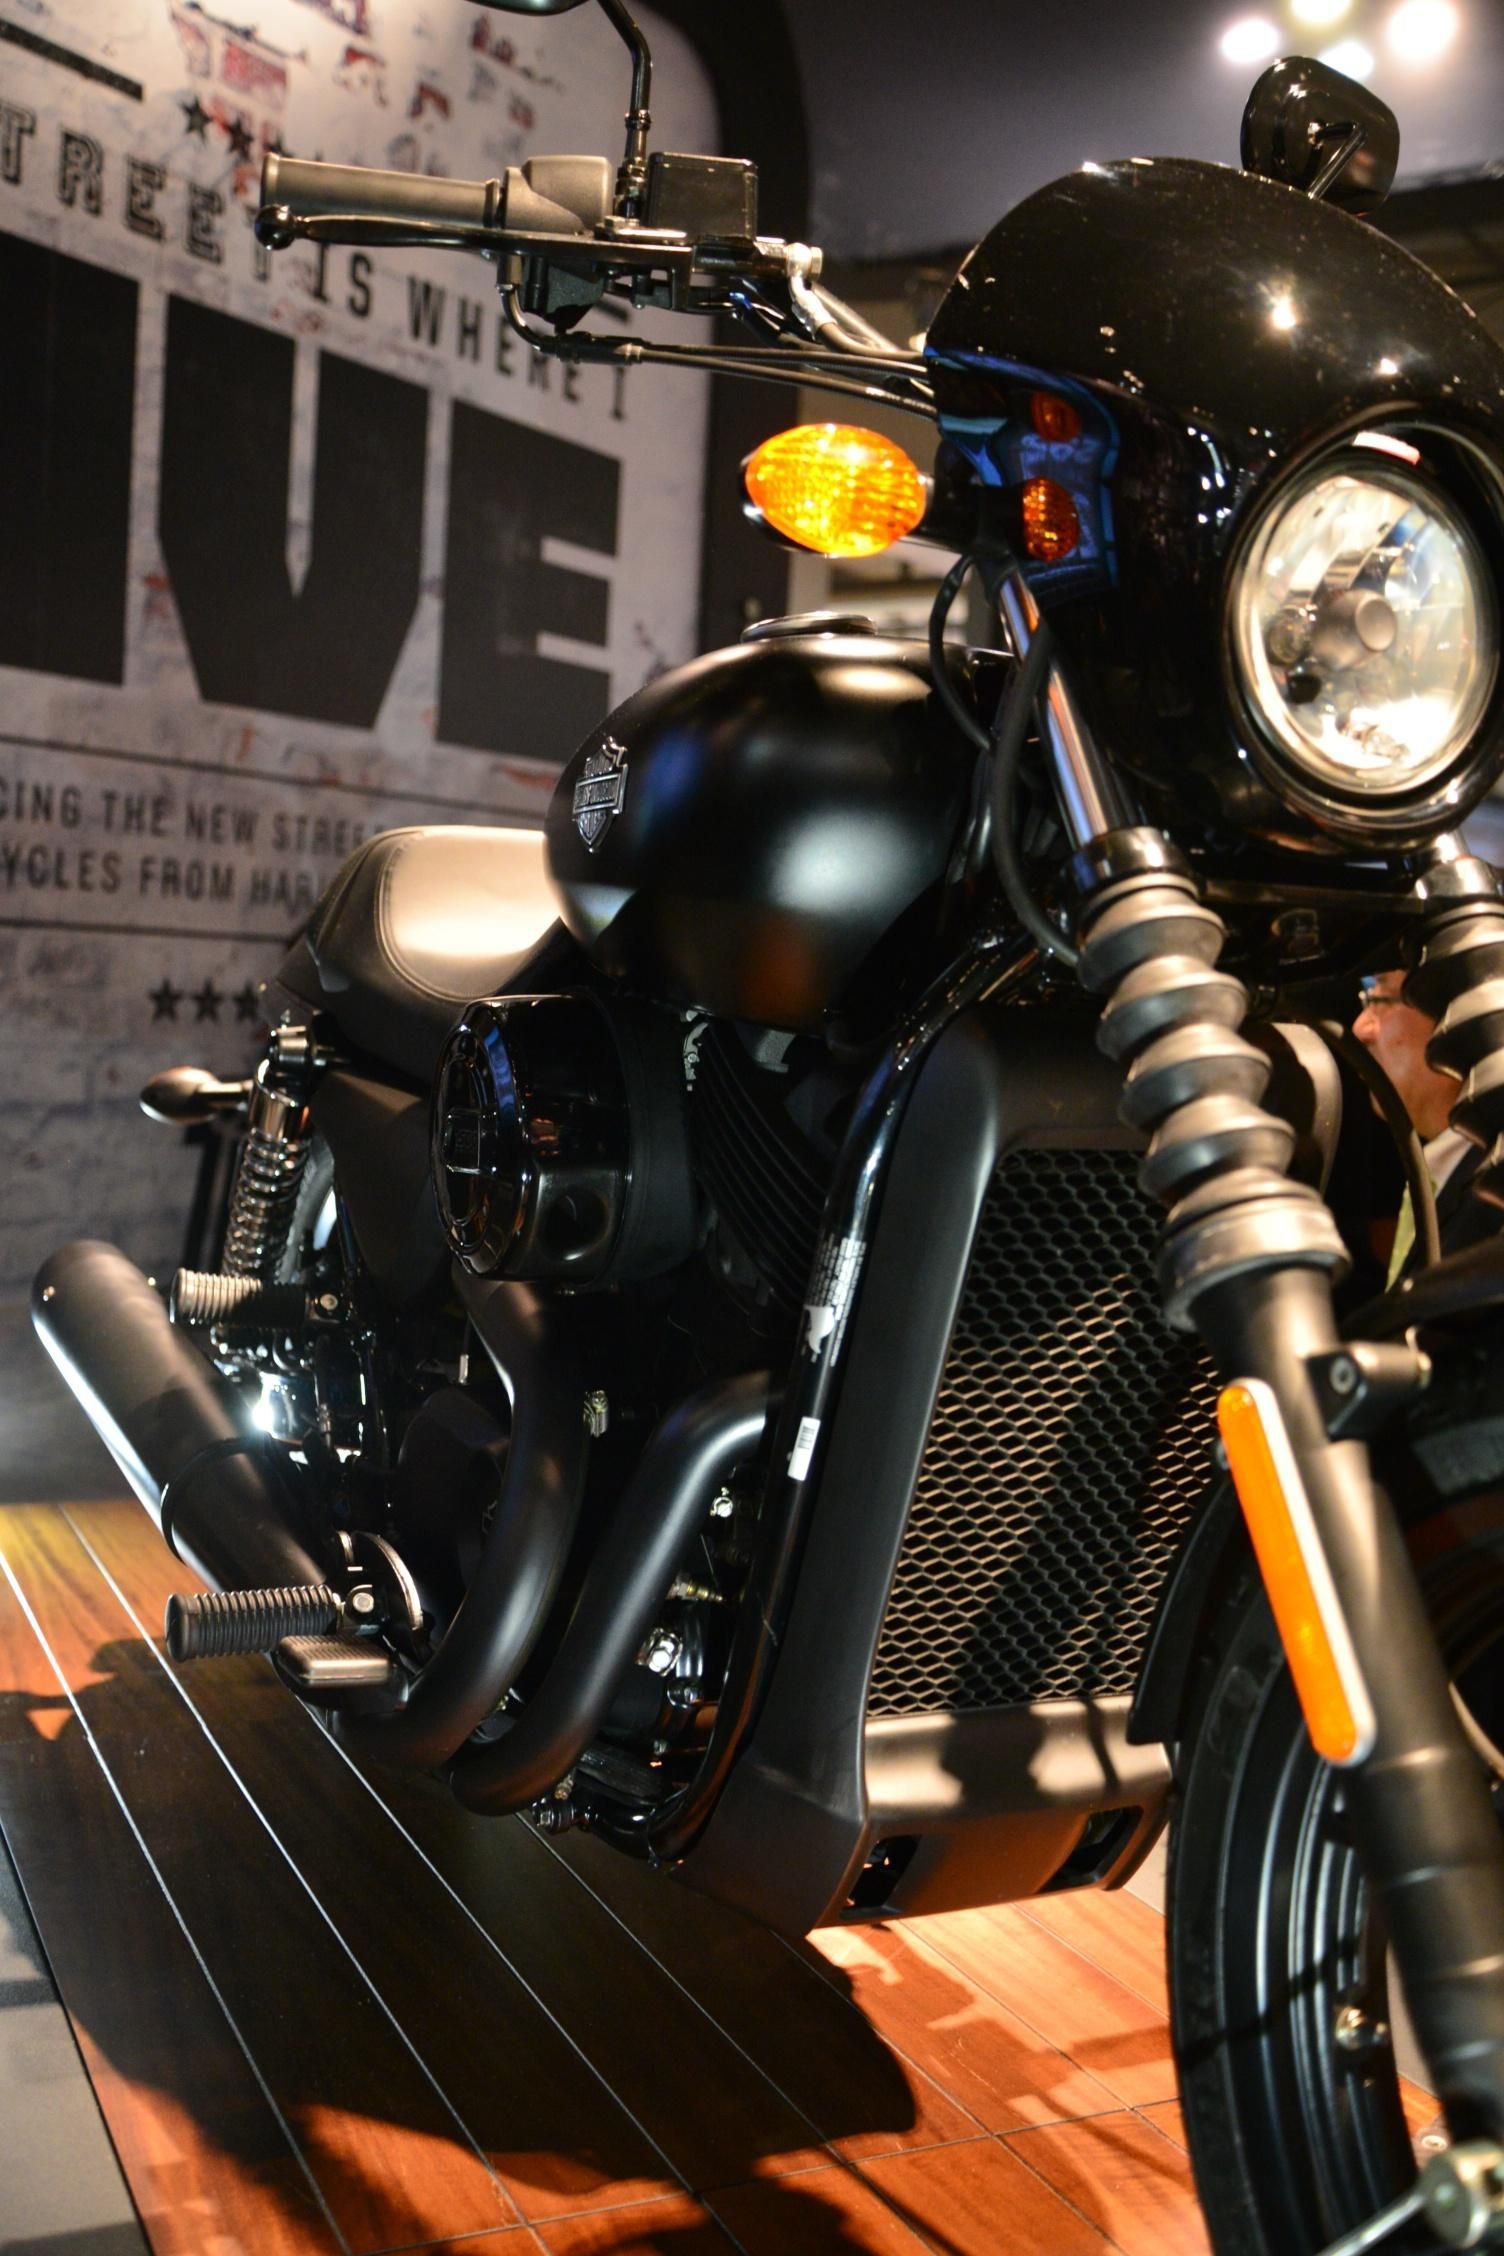 Harley Davidson Street 500 Radiator up close - not to everyone's taste?